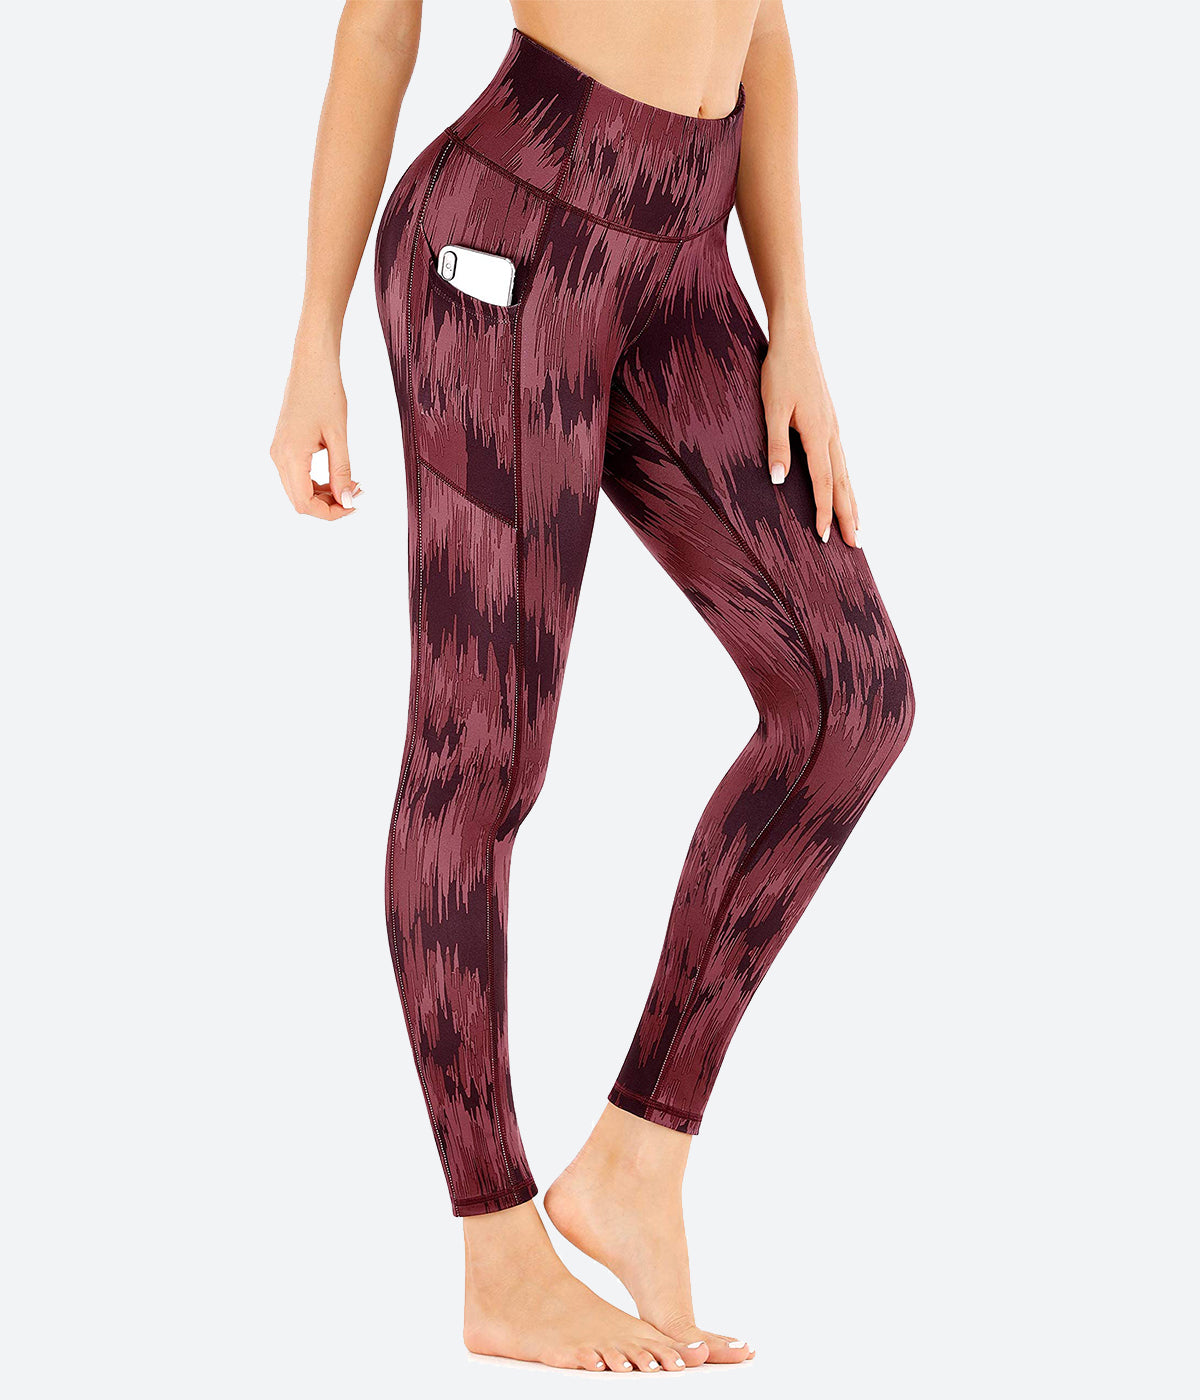 Printed High Waisted Yoga Pants with Pockets - HY 40P